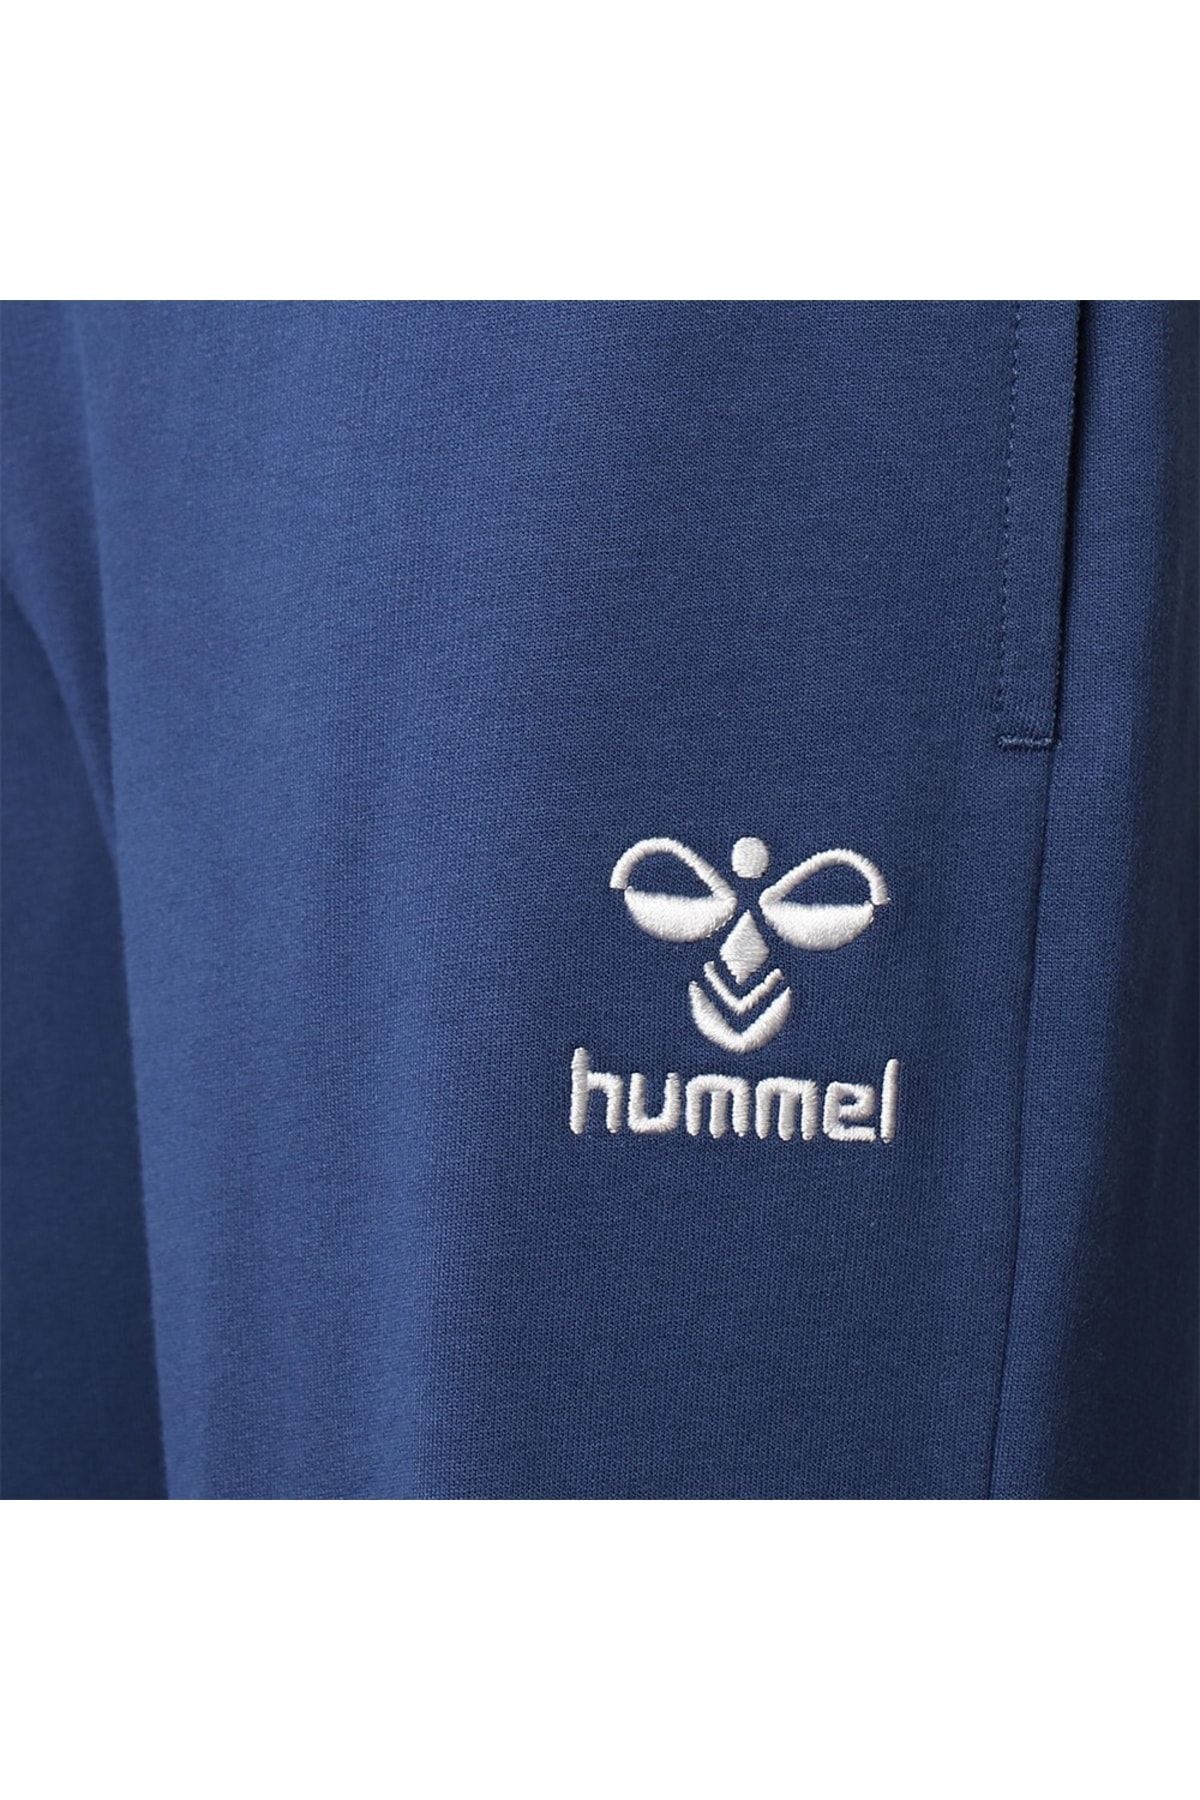 hummel لباس آبی HMllucky مردانه's Blue Six